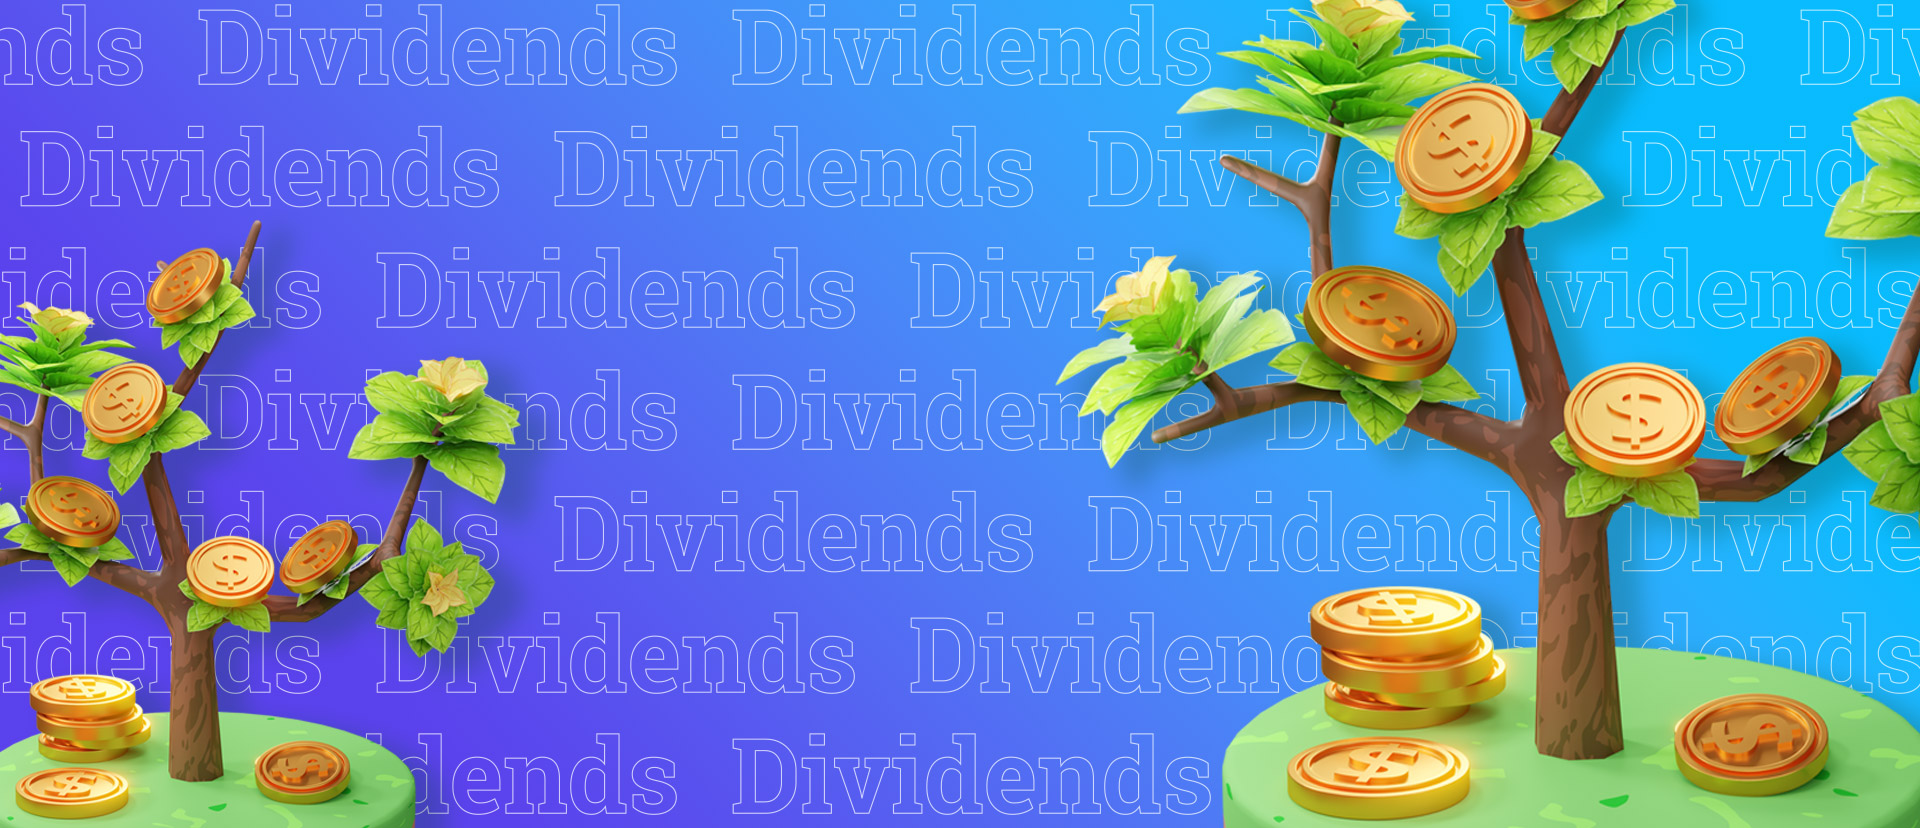 3 akcijas ar dividendēm virs 6%